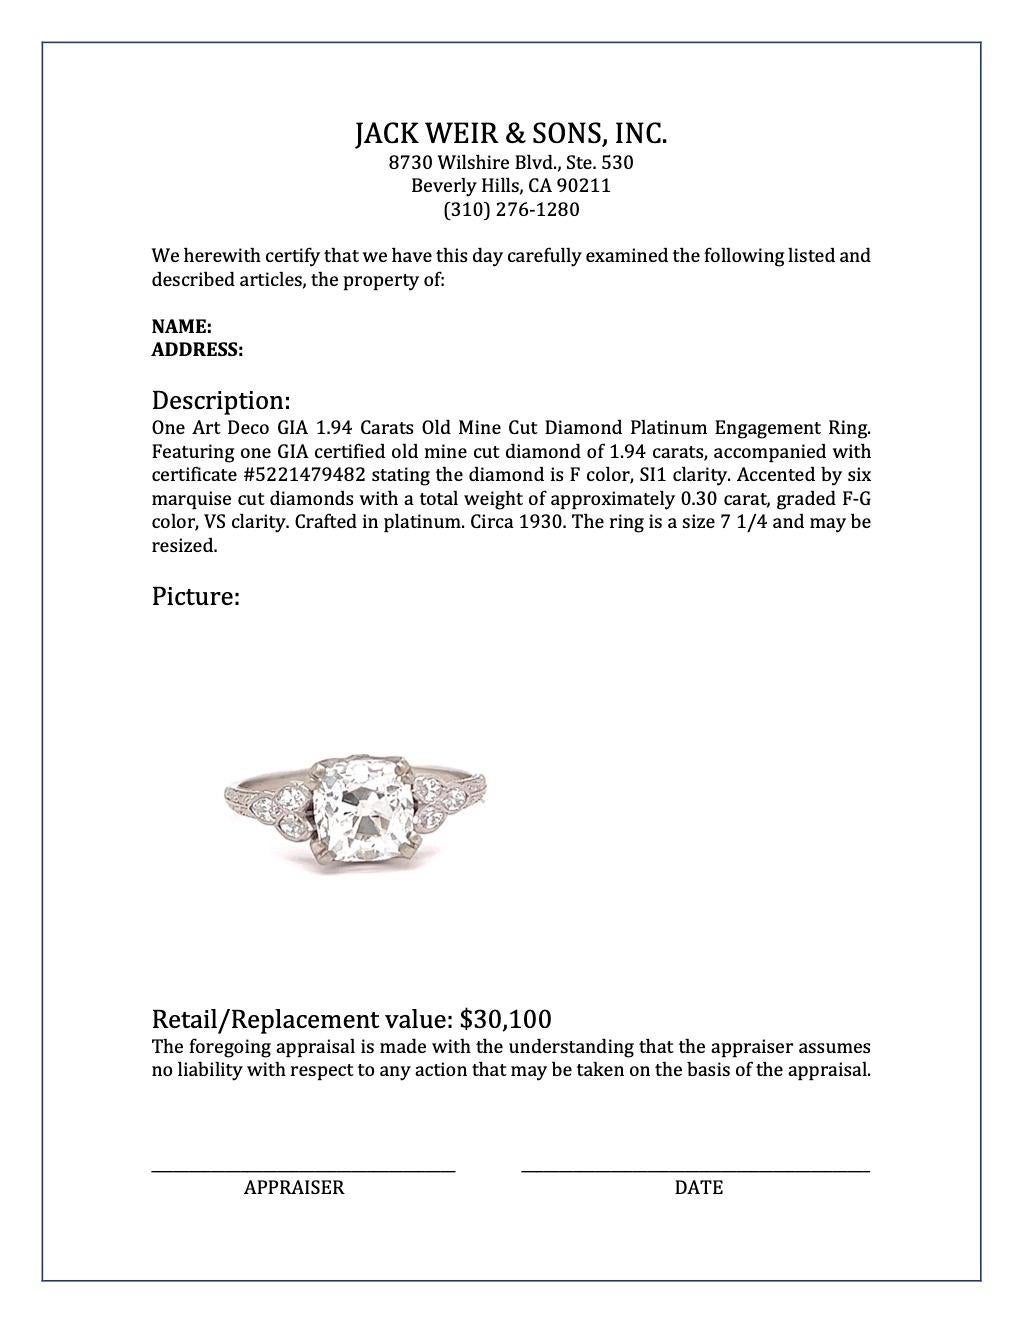 Art Deco GIA 1.94 Carats Old Mine Cut Diamond Platinum Engagement Ring 5